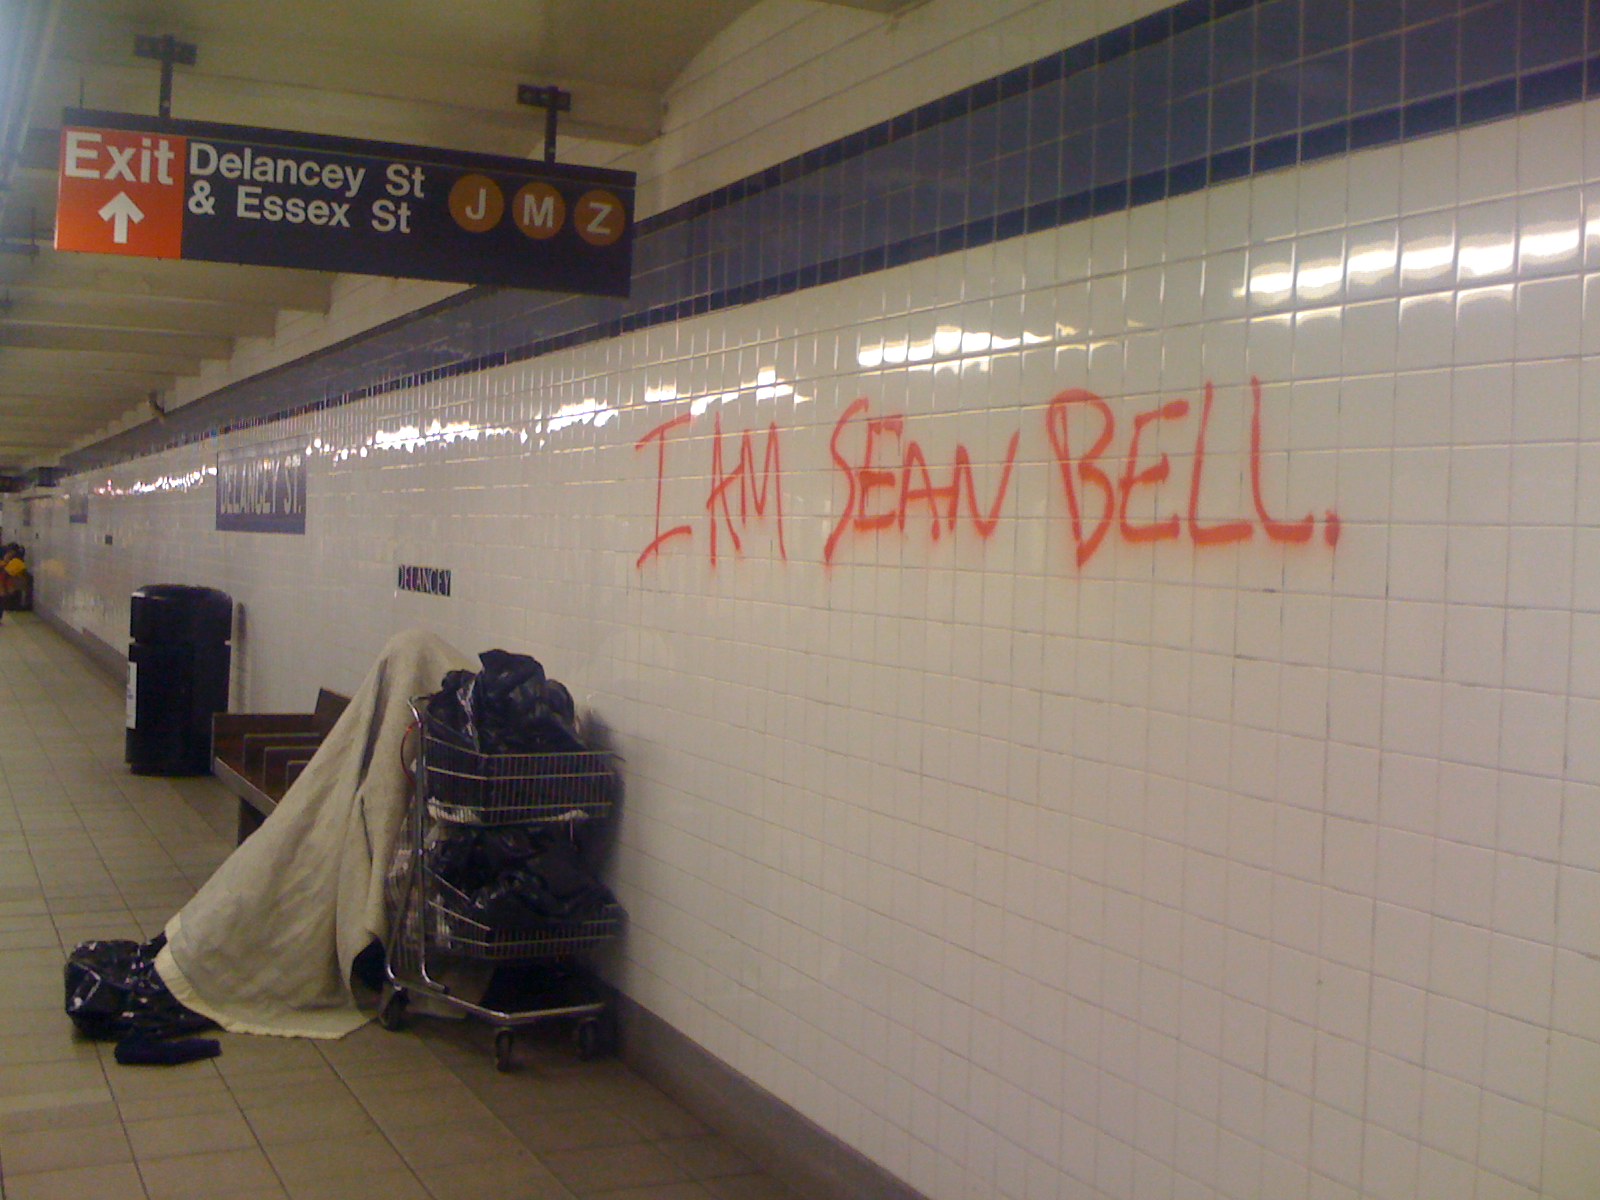 Sean Bell graffiti in the Delancy St. station